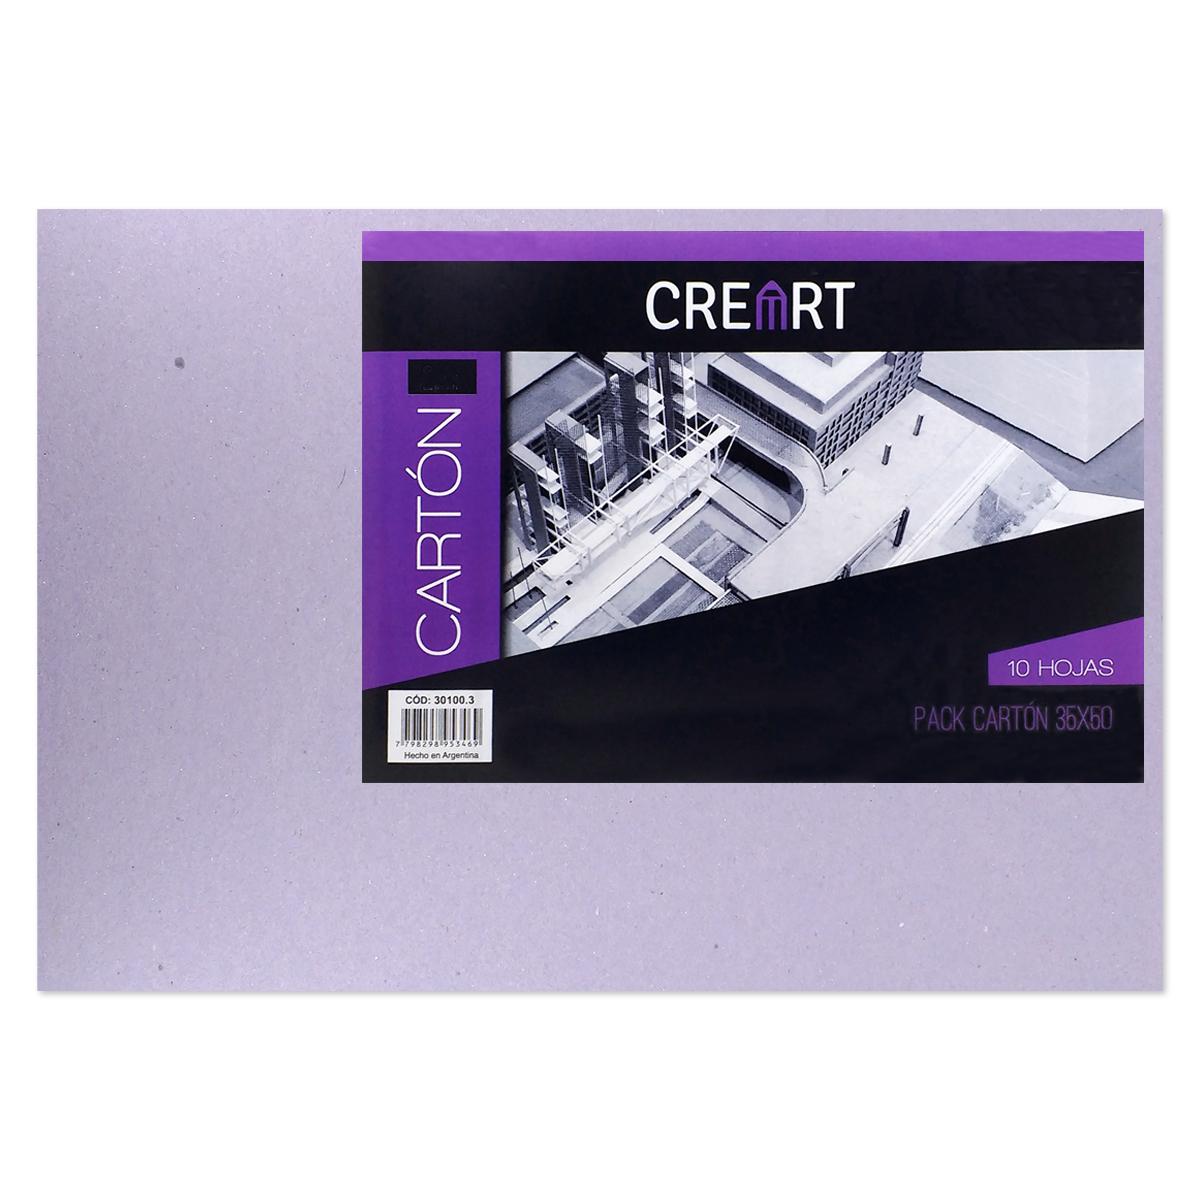 CARTON GRIS CREART 1 MM DE 35 X 50 CM.PACK X 10 HOJAS